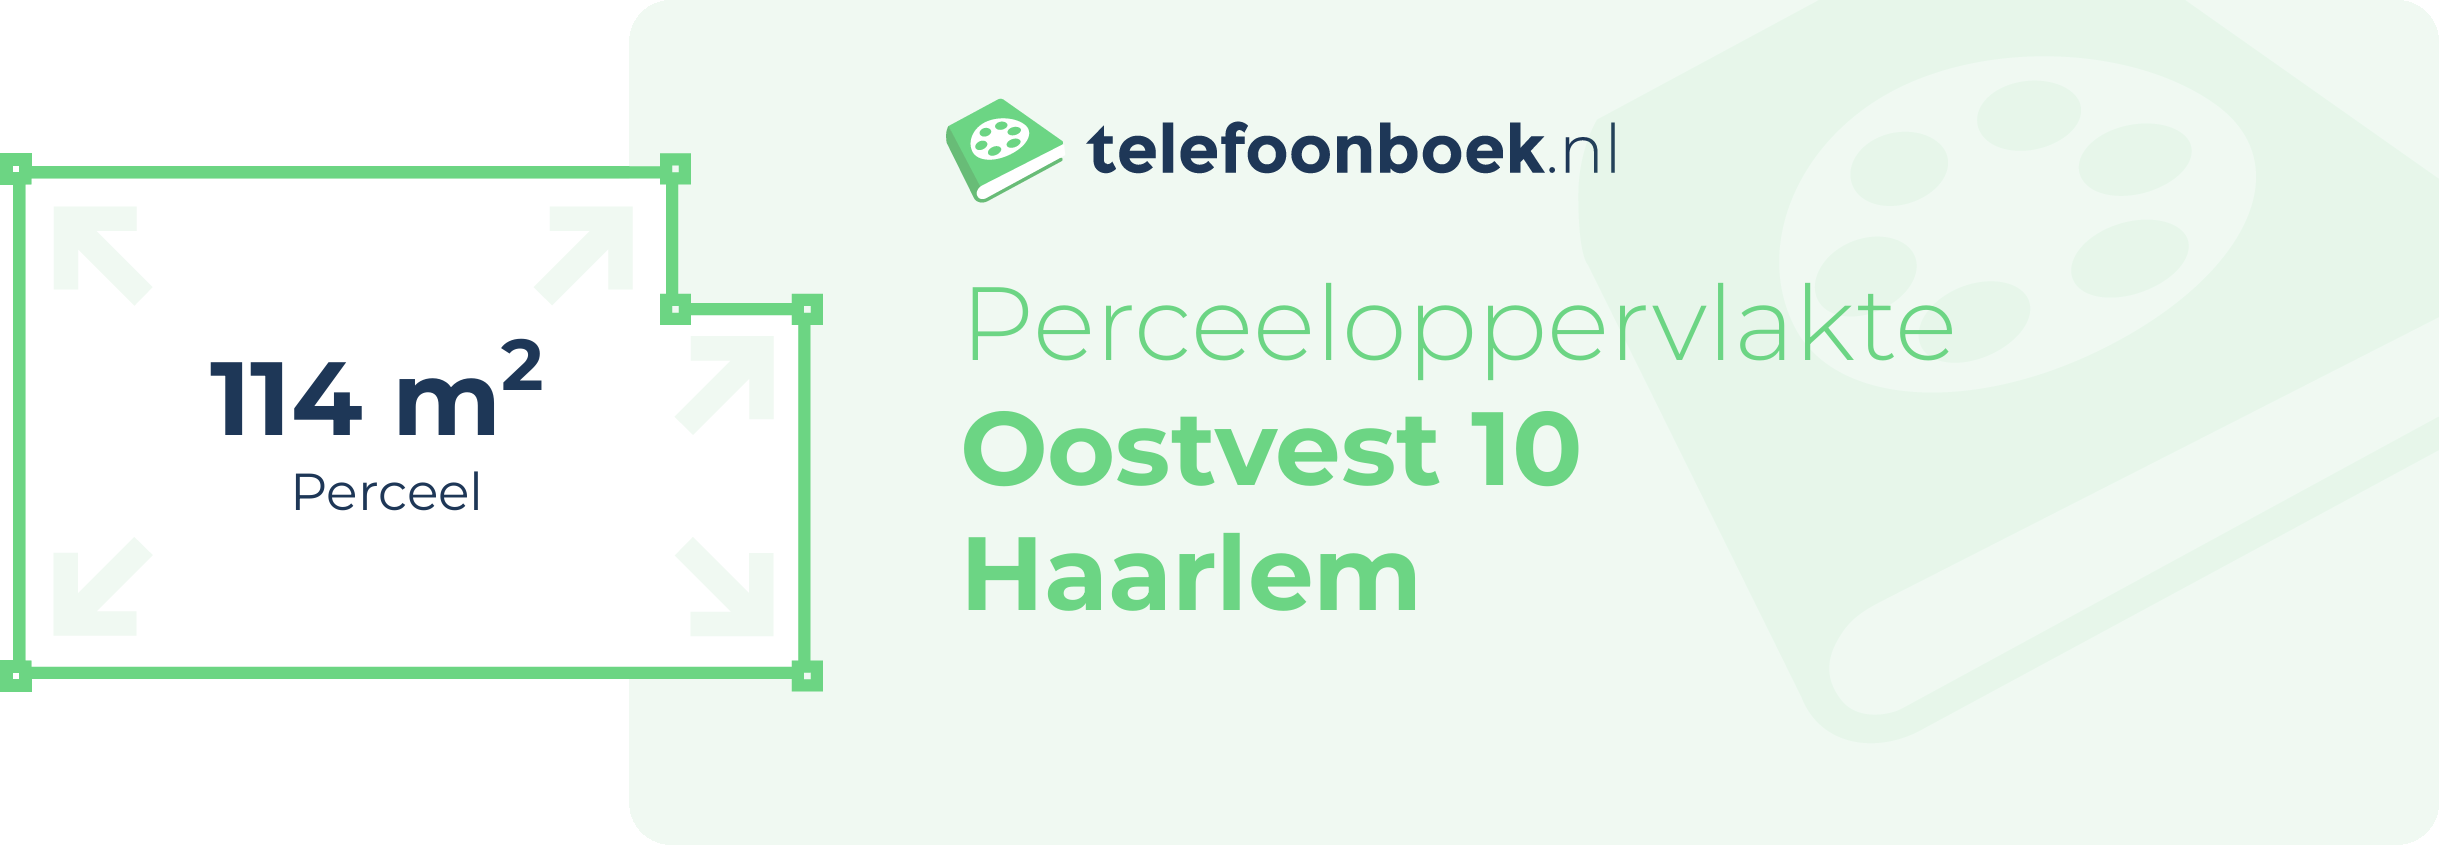 Perceeloppervlakte Oostvest 10 Haarlem